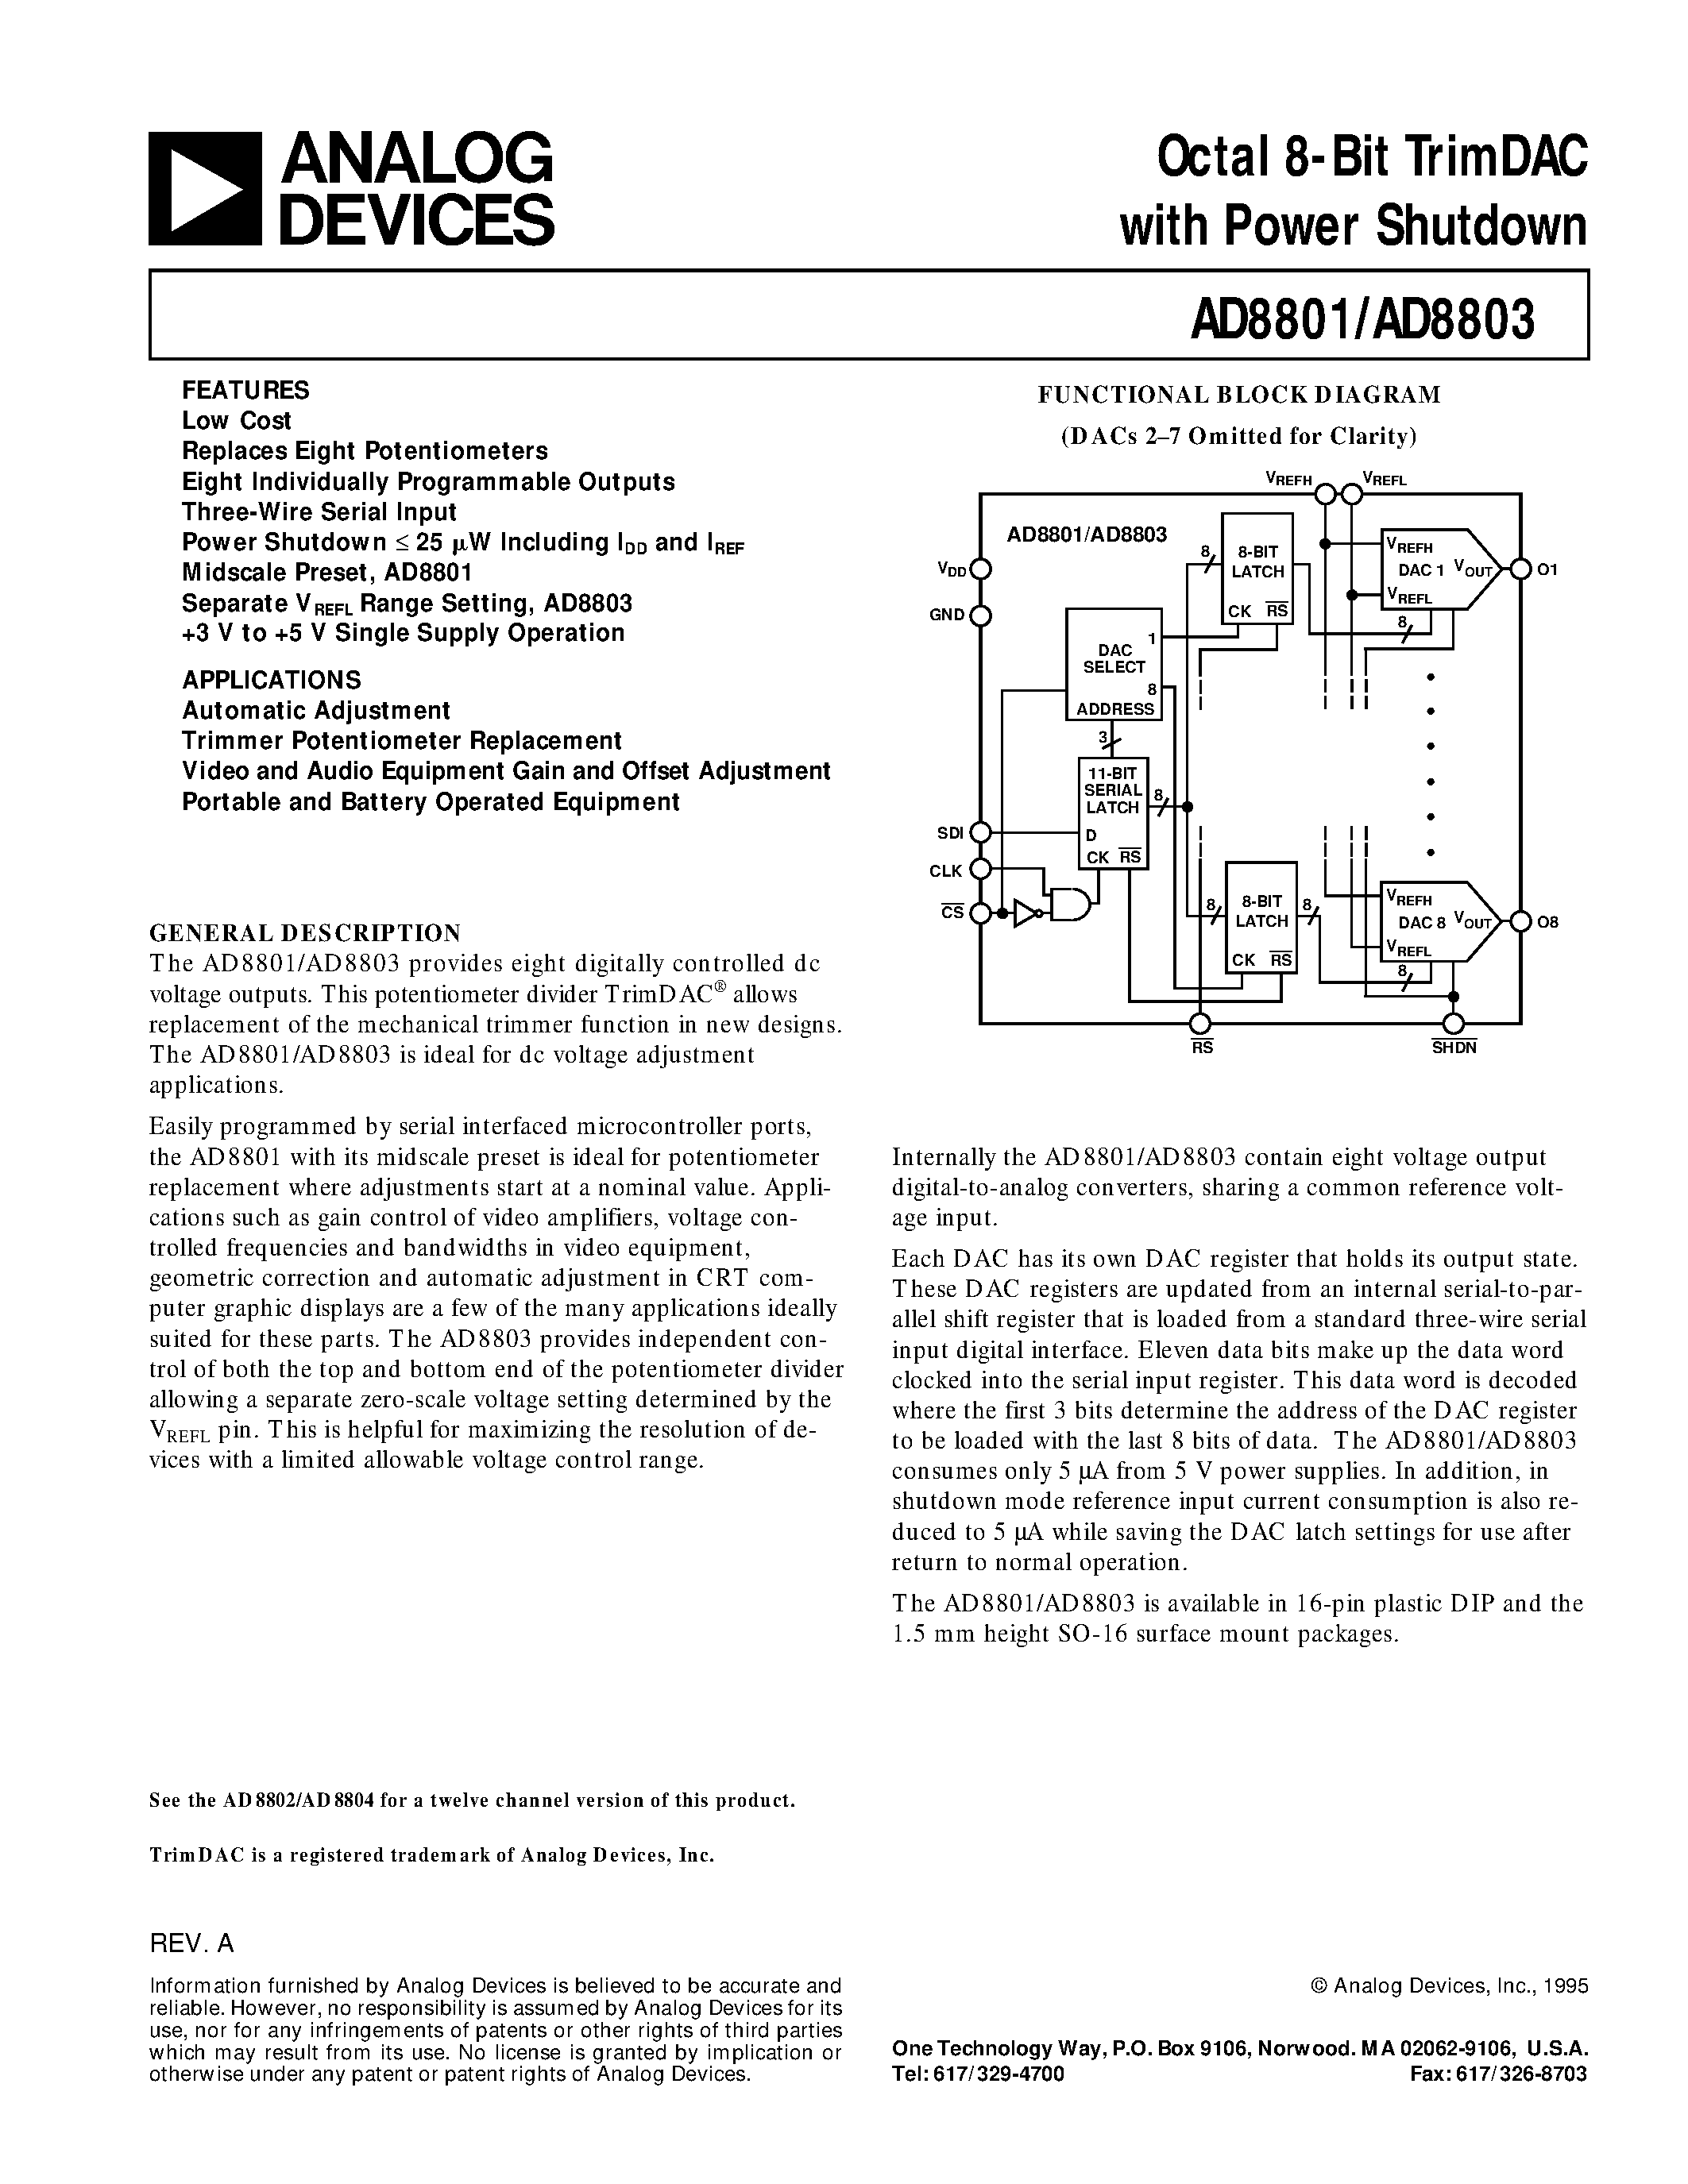 Даташит AD8801AR - Octal 8-Bit TrimDAC with Power Shutdown страница 1